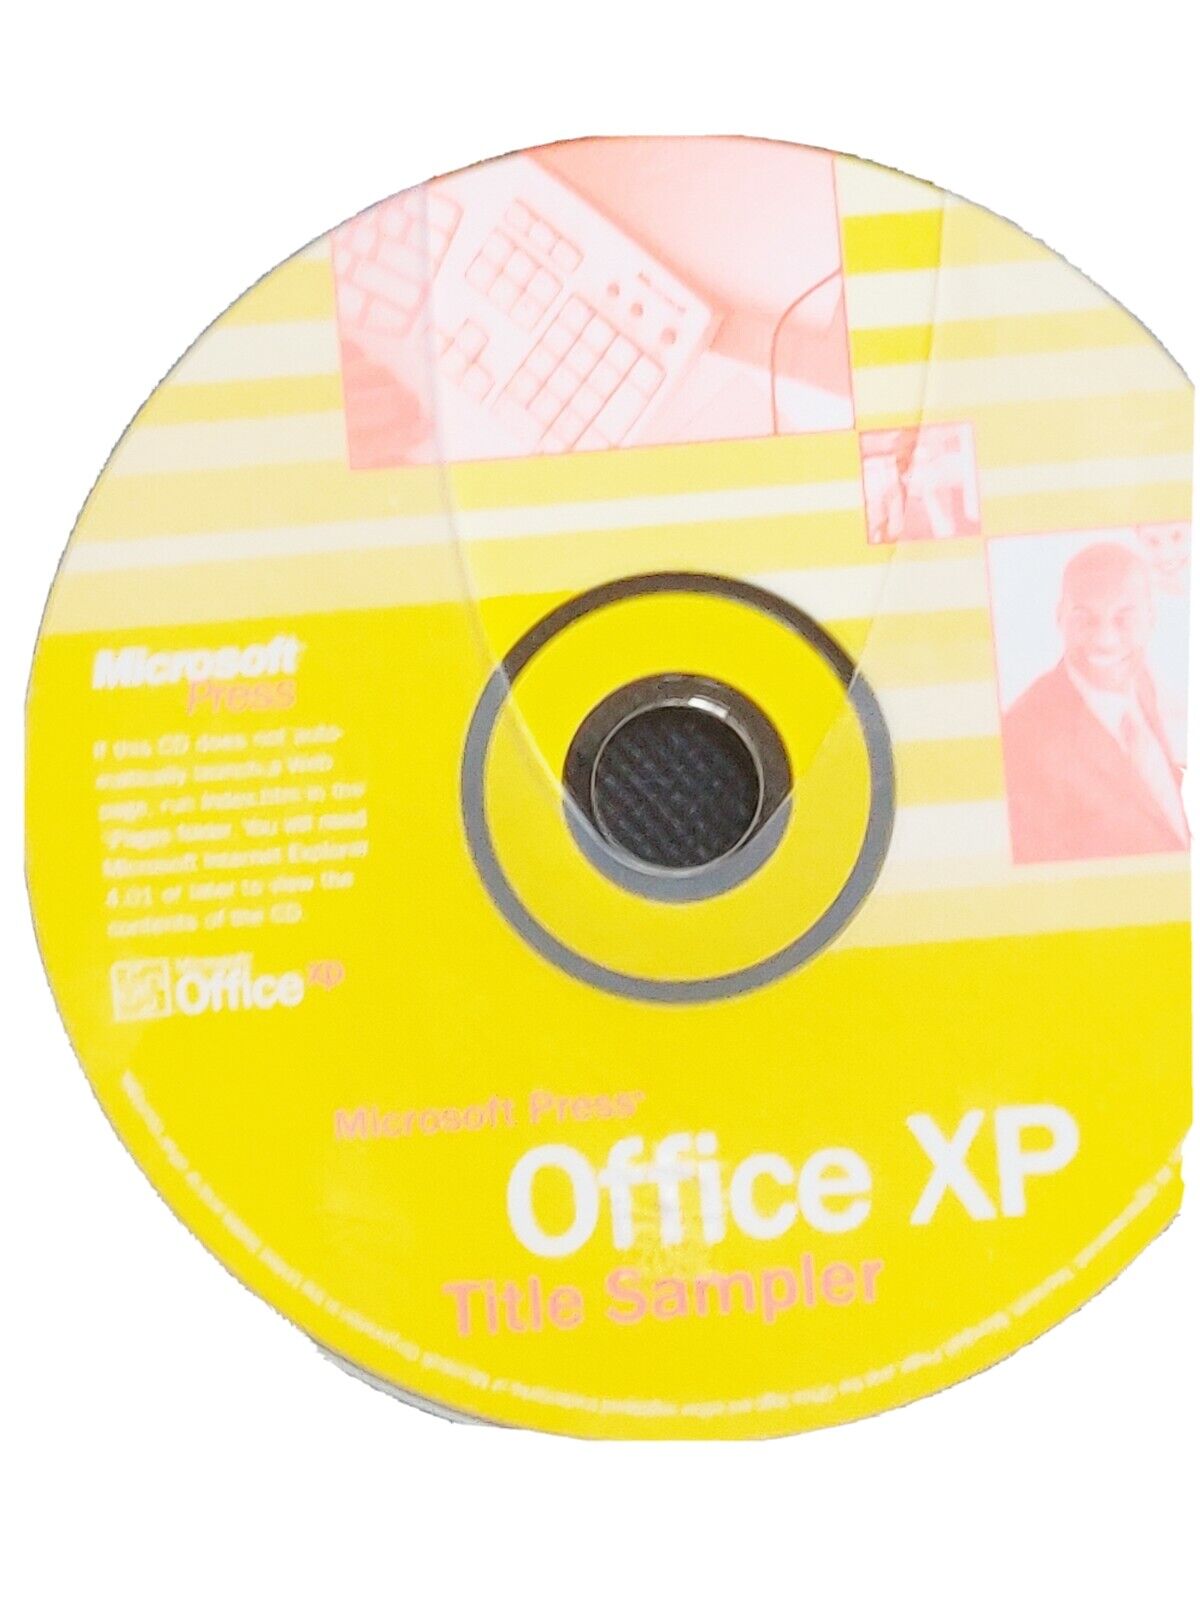 Microsoft Press Office XP Title Sampler cd disc only